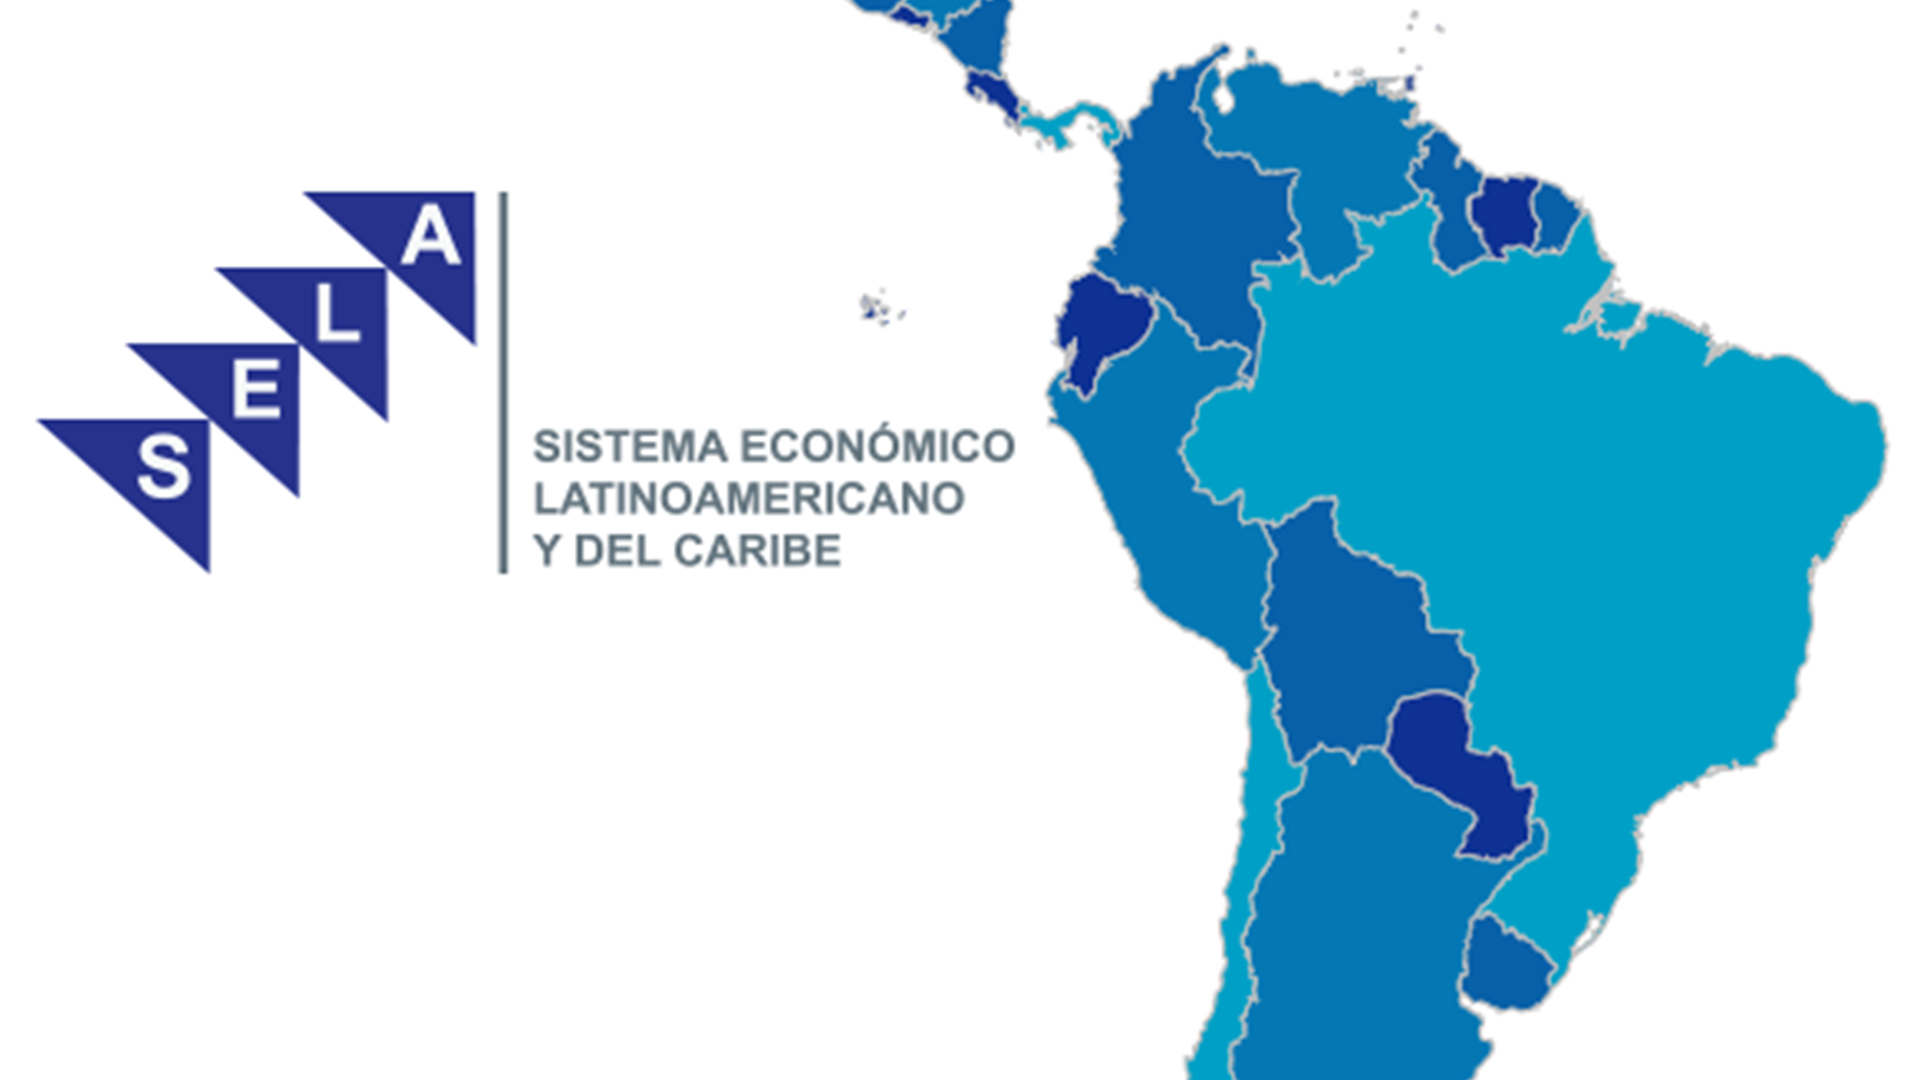 Reunión preparatoria del Consejo Latinoamericano discute agenda plurianual del organismo